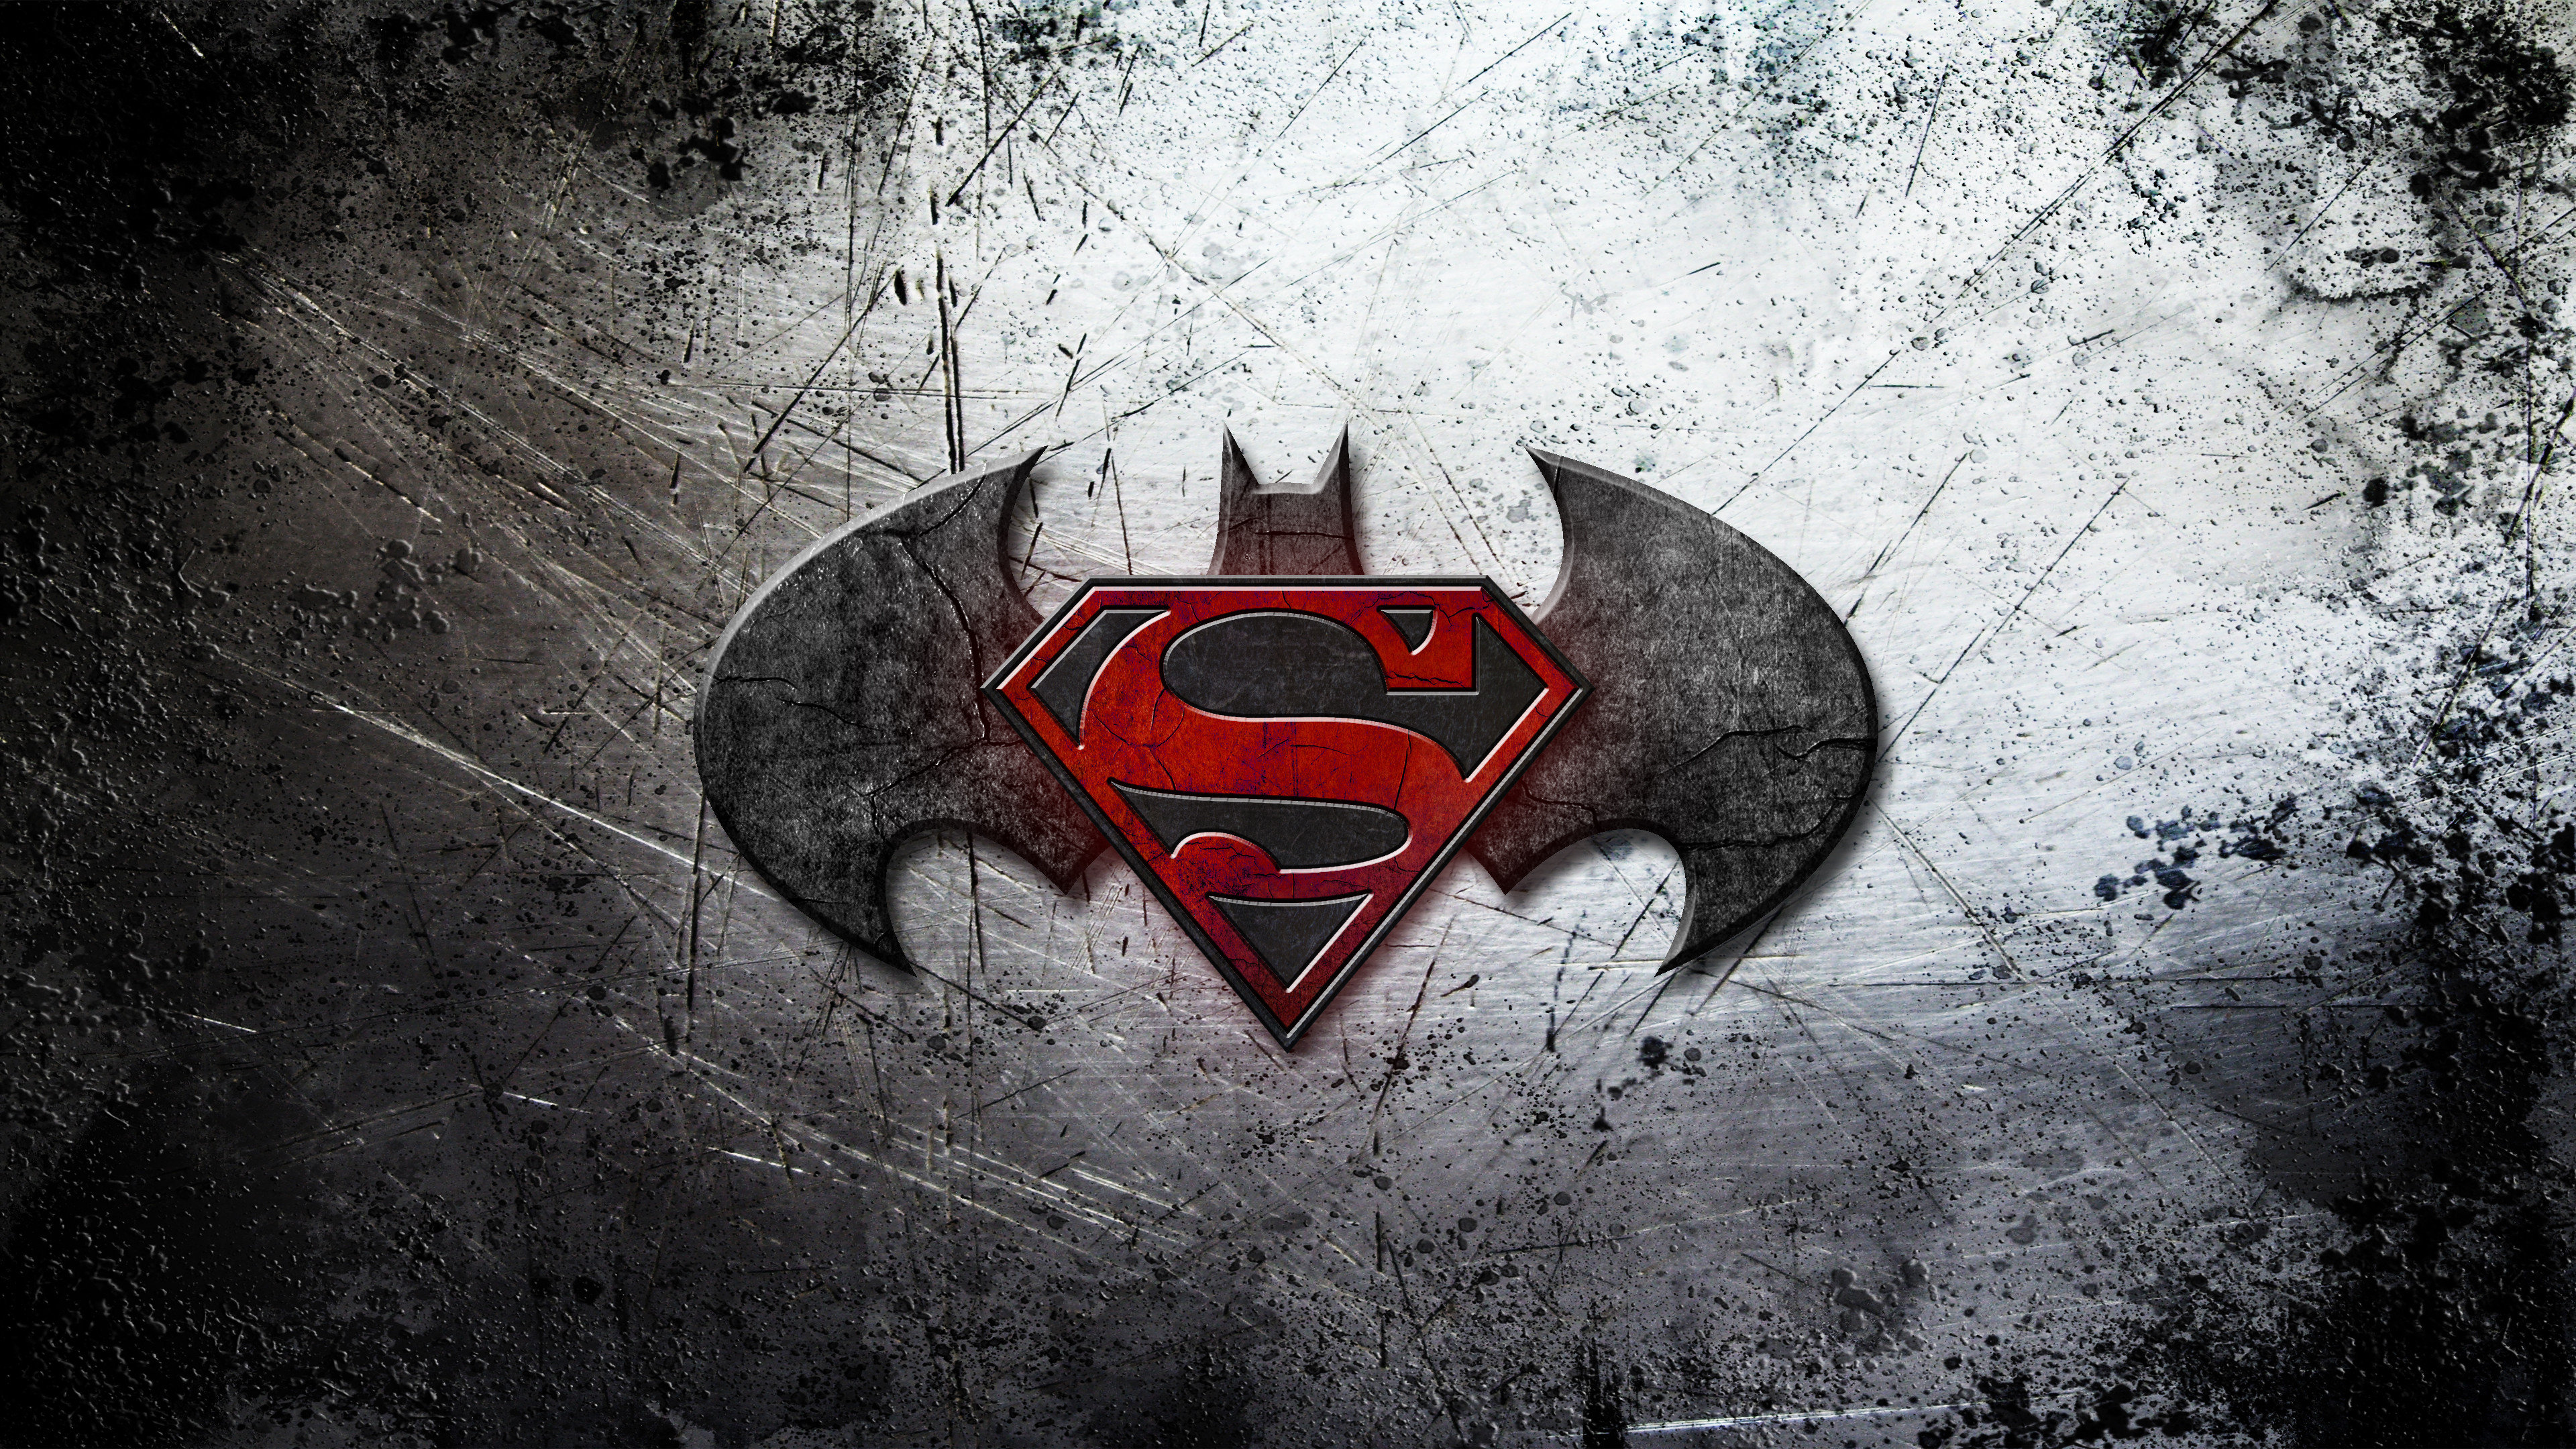 Best Batman V Superman: Dawn Of Justice wallpaper ID:83764 for High Resolution uhd 4k PC